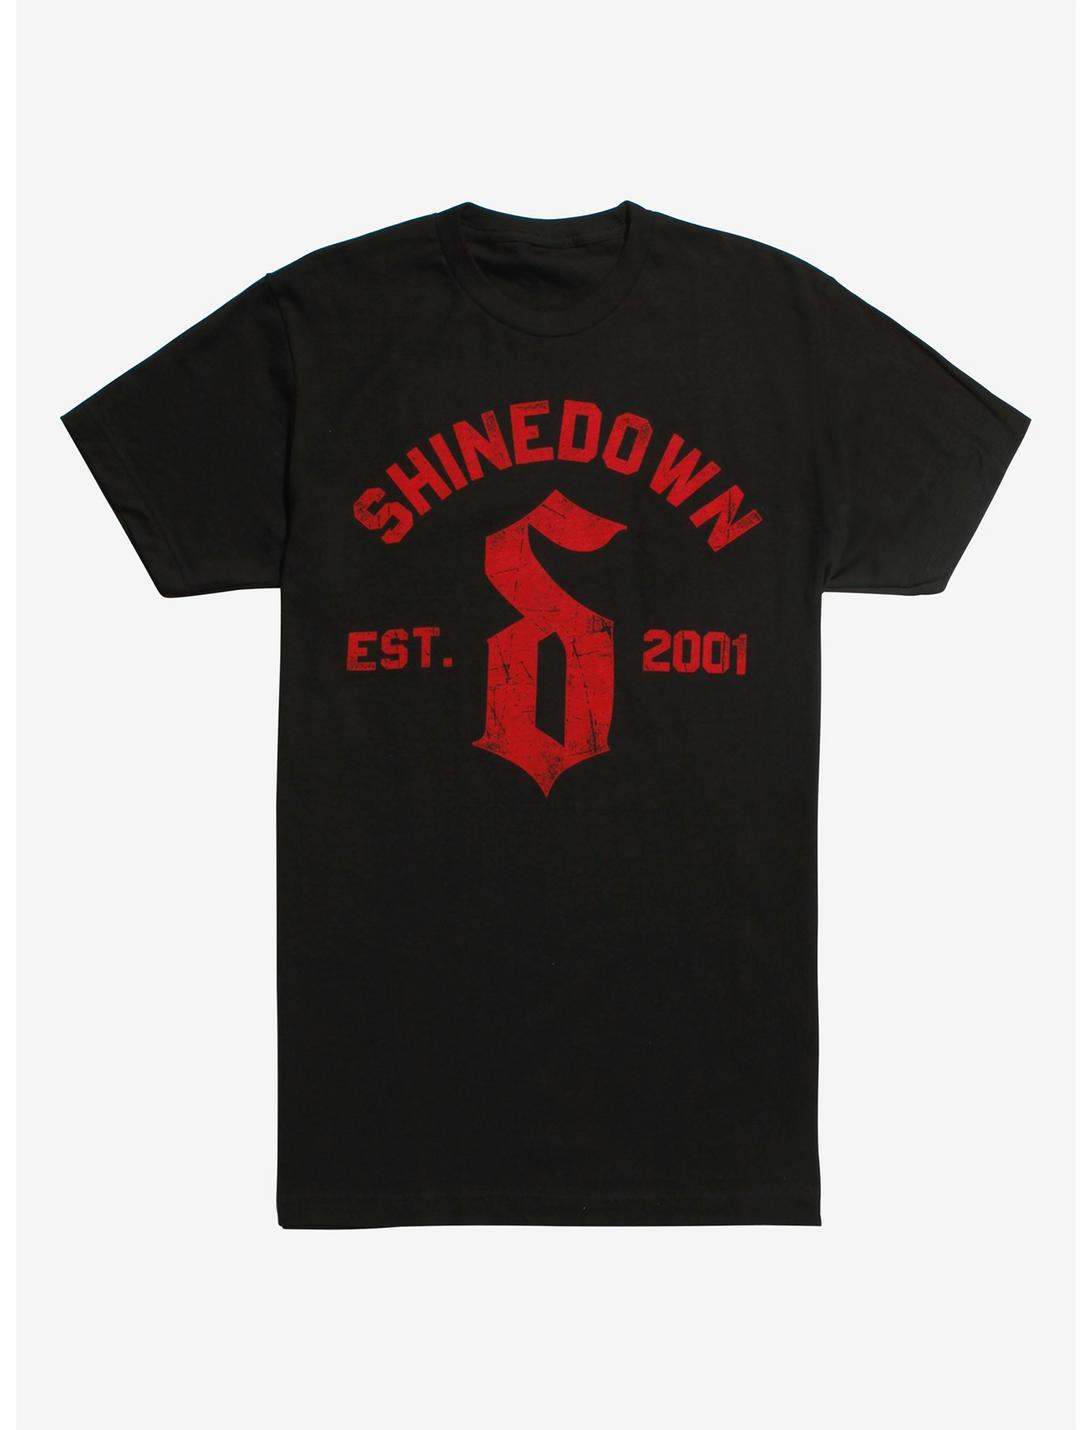 Shinedown Est. 2001 T-Shirt, BLACK, hi-res